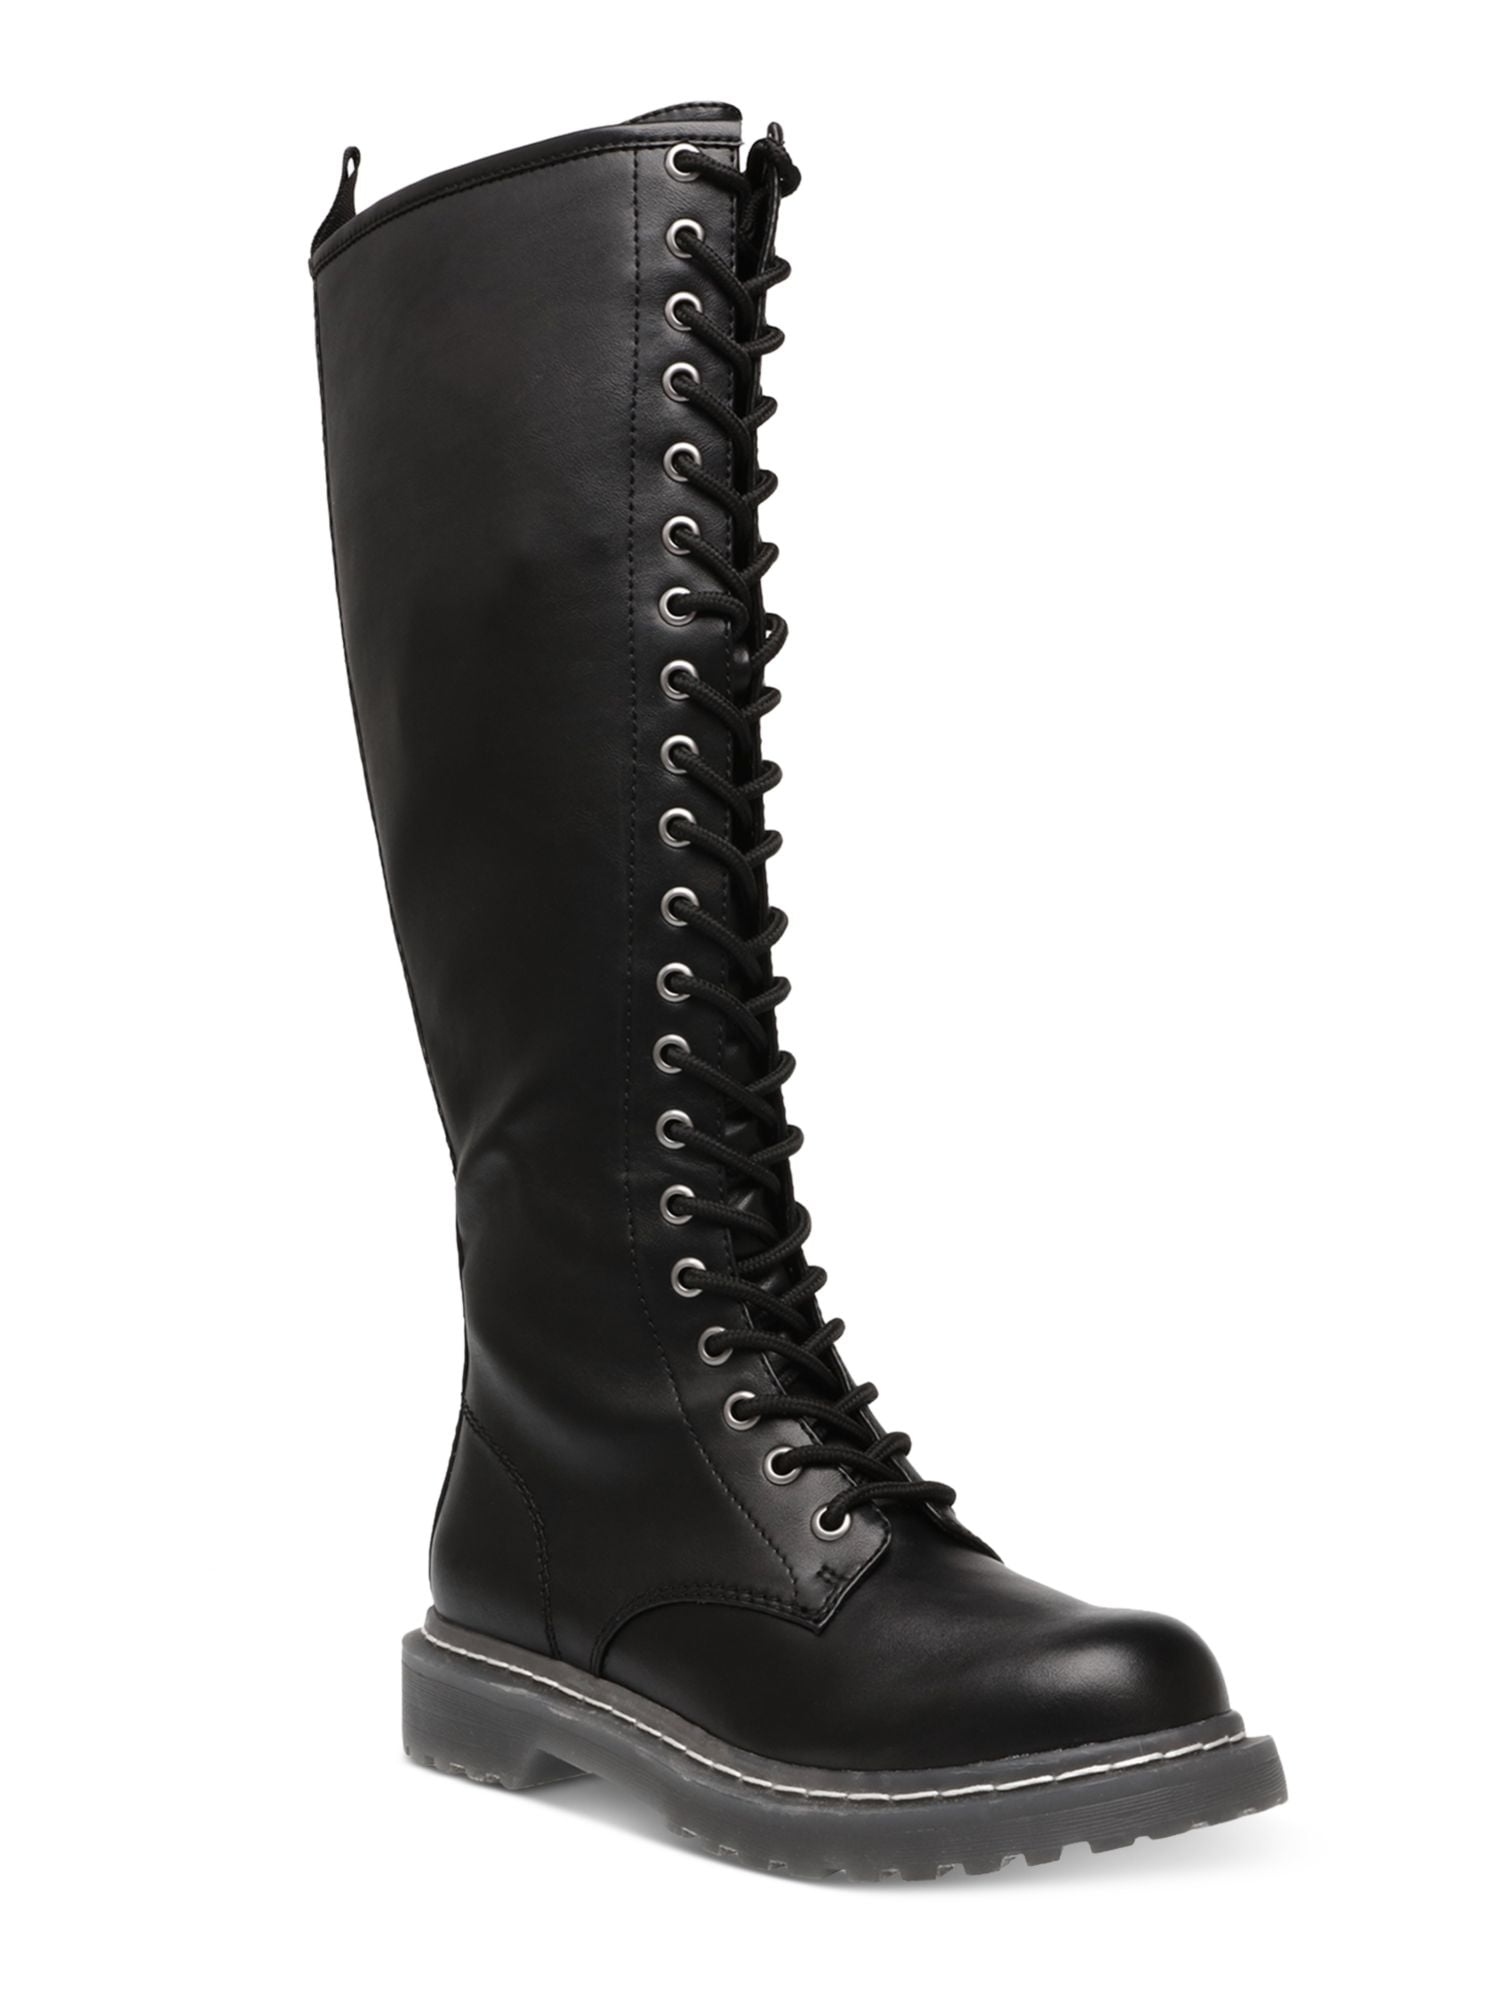 WILD PAIR Womens Black Round Toe Block Heel Lace-Up Boots 6.5 - Walmart.com